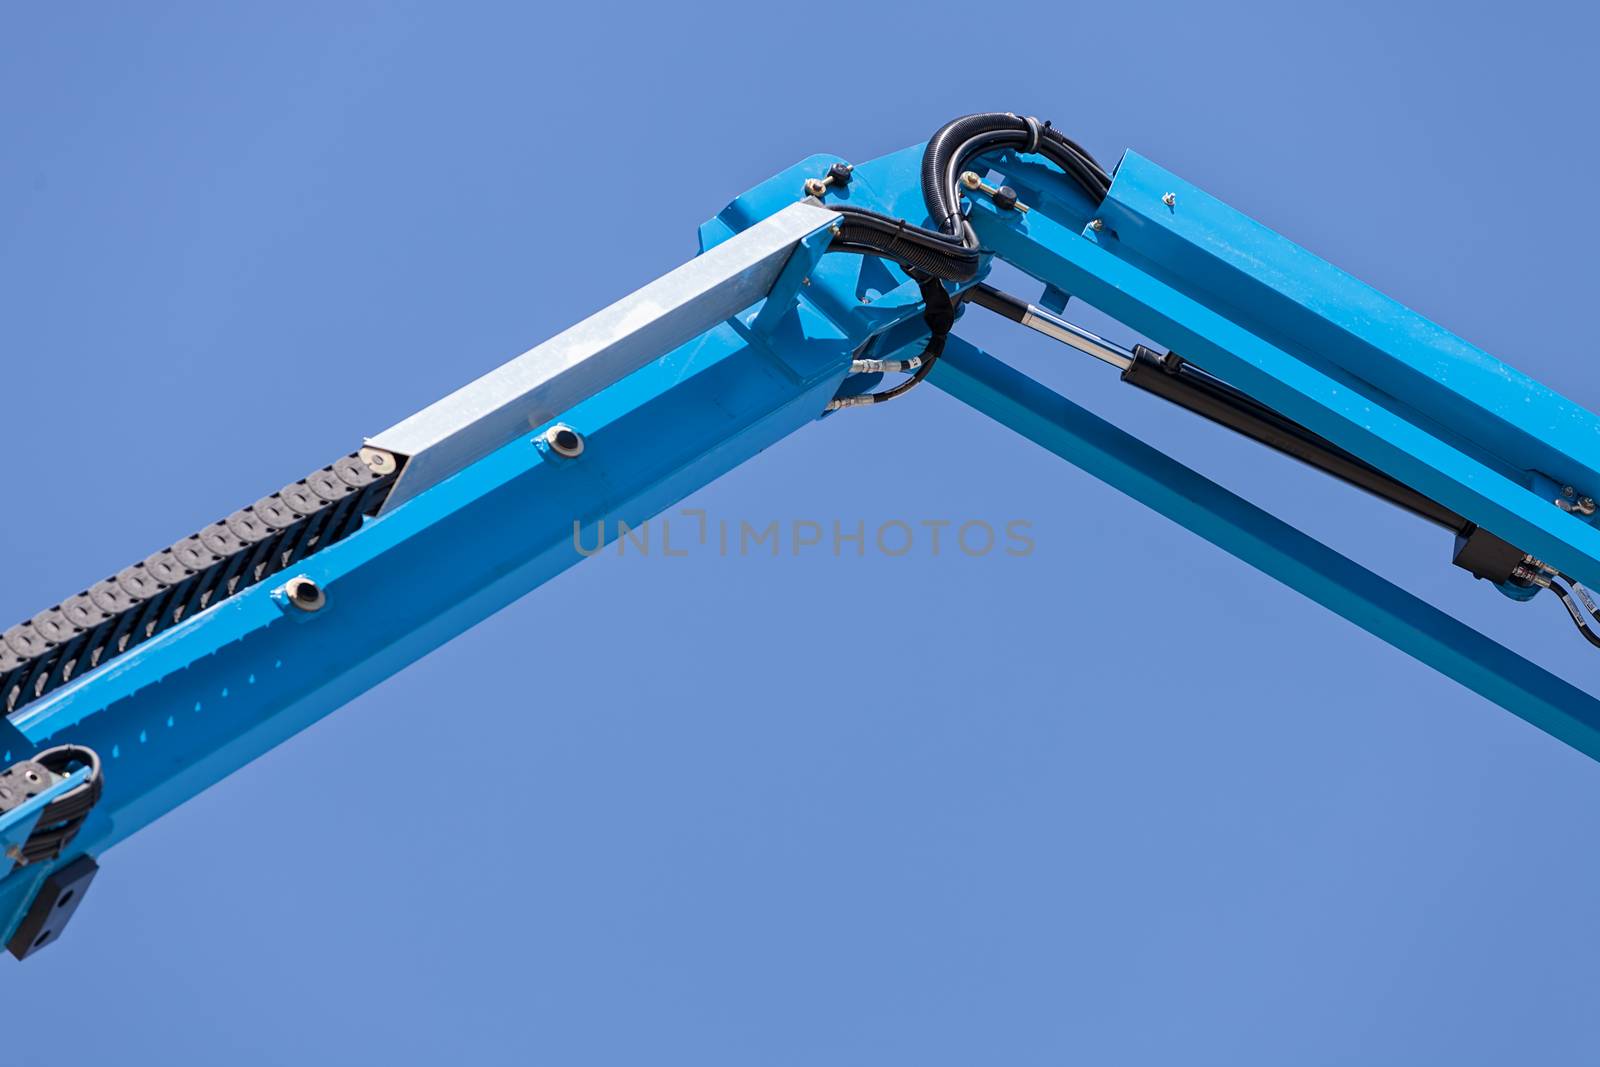 crane machine by vladimirnenezic